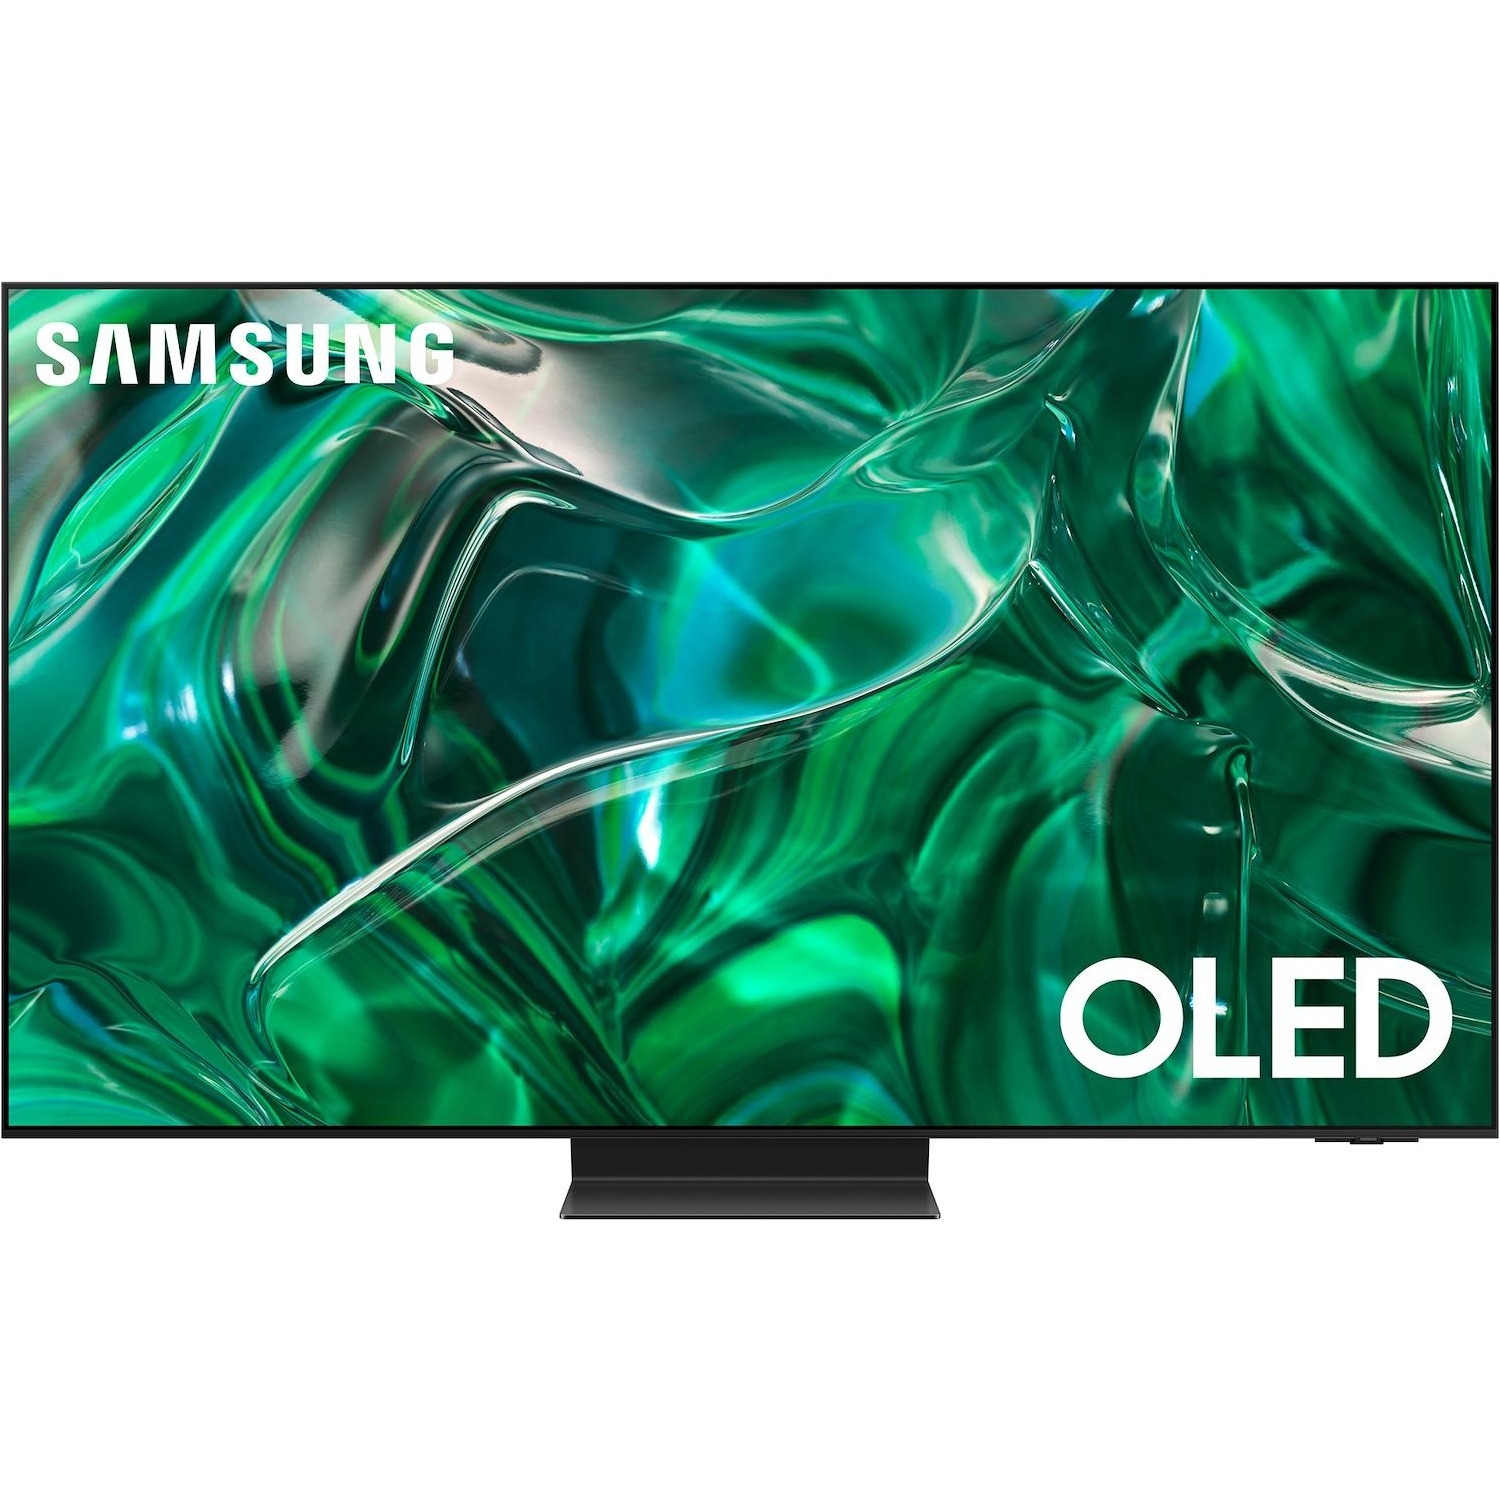 Immagine per TV OLED UHD 4K Smart Samsung 55S95C da DIMOStore